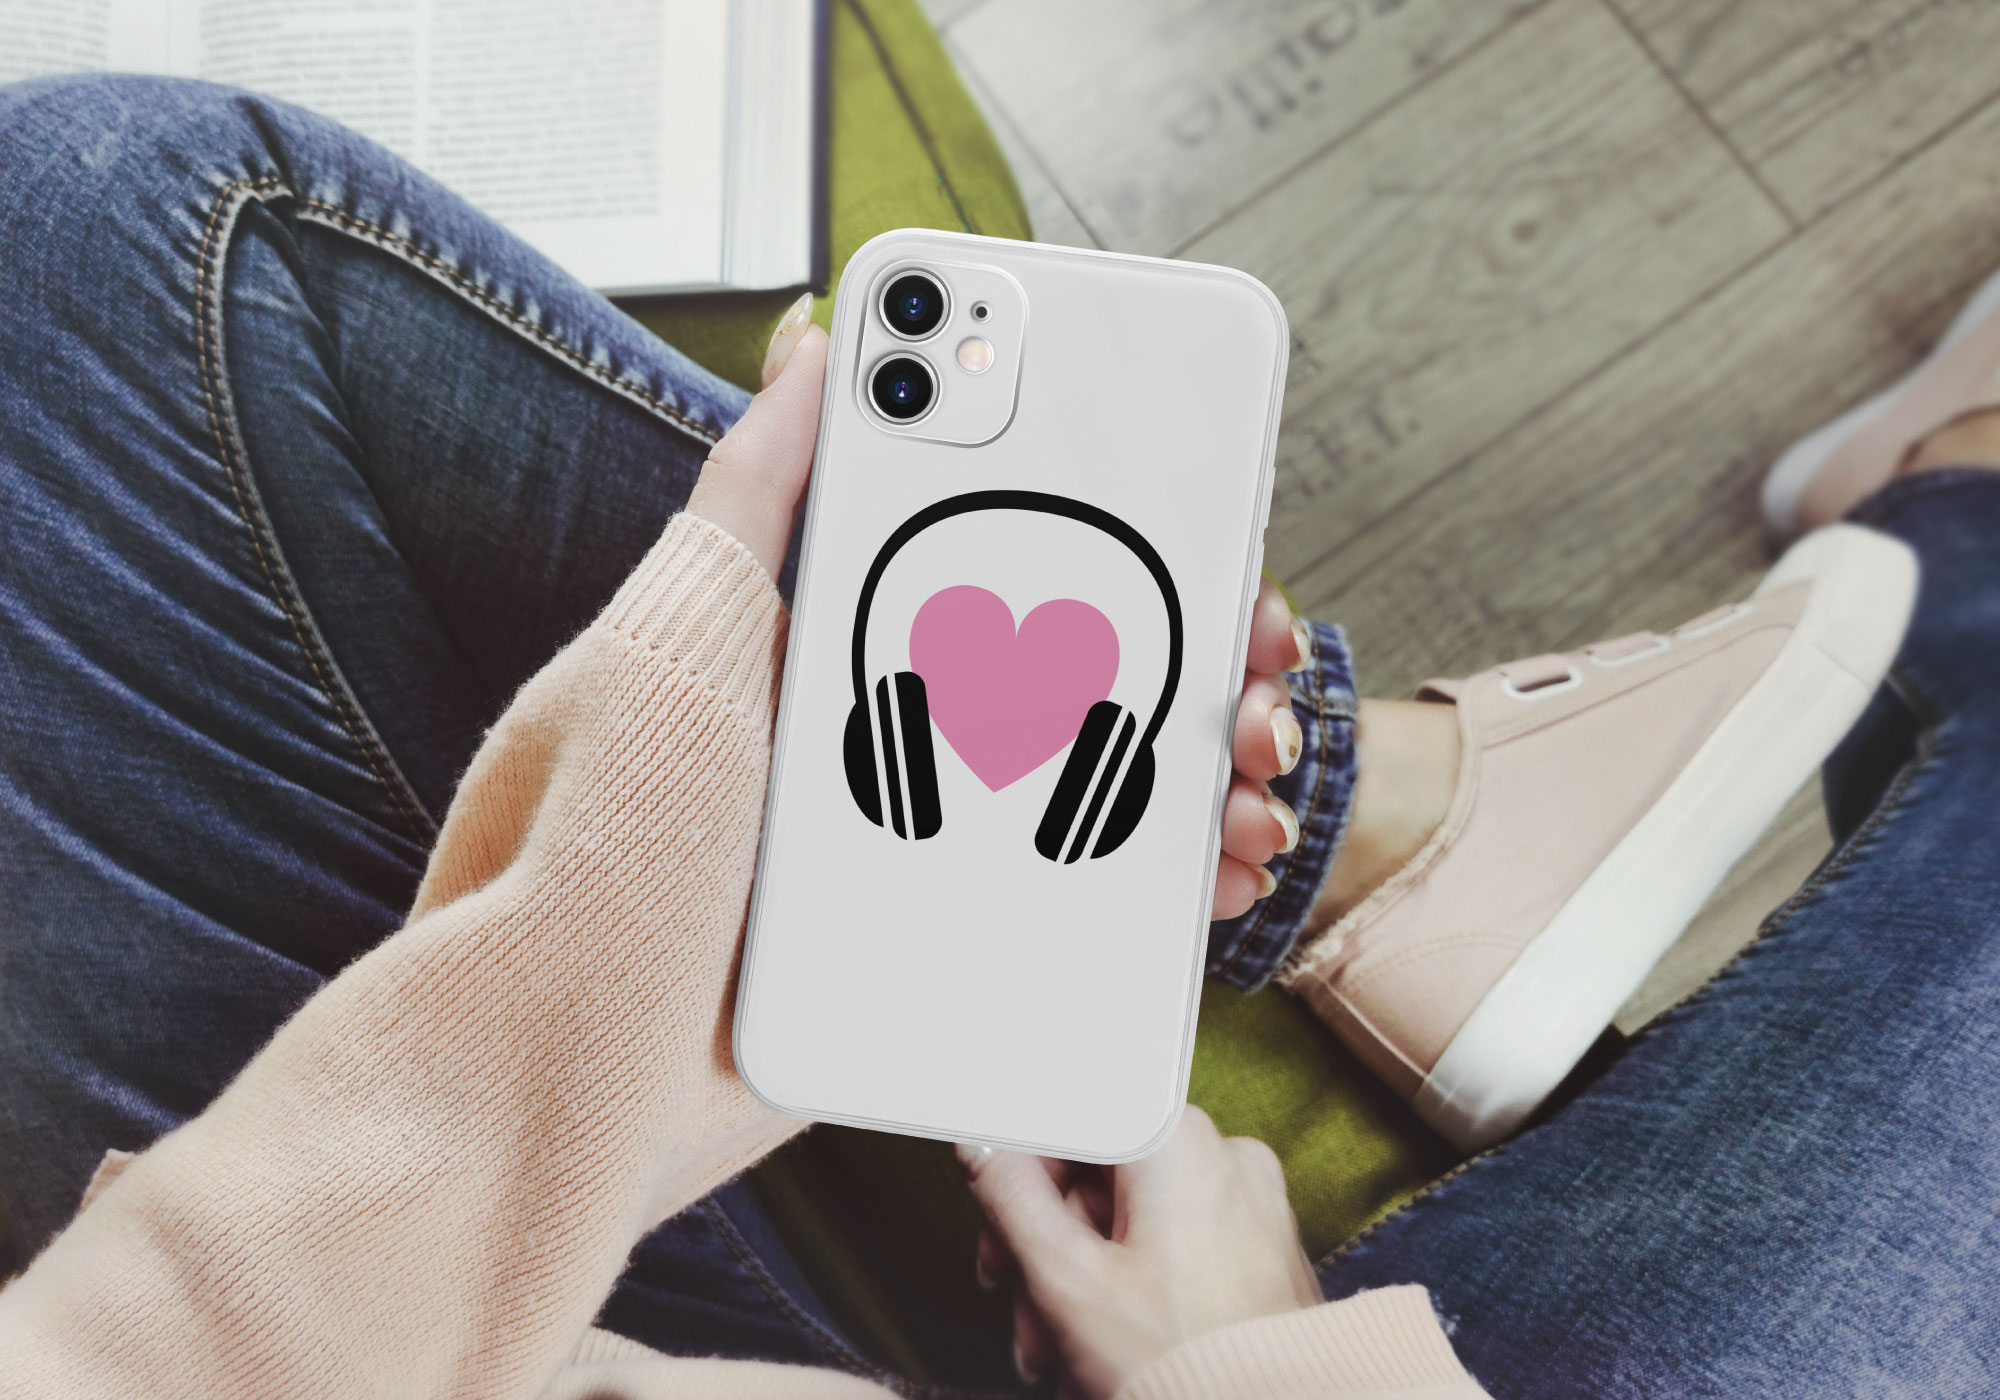 Free Heart Headphone SVG